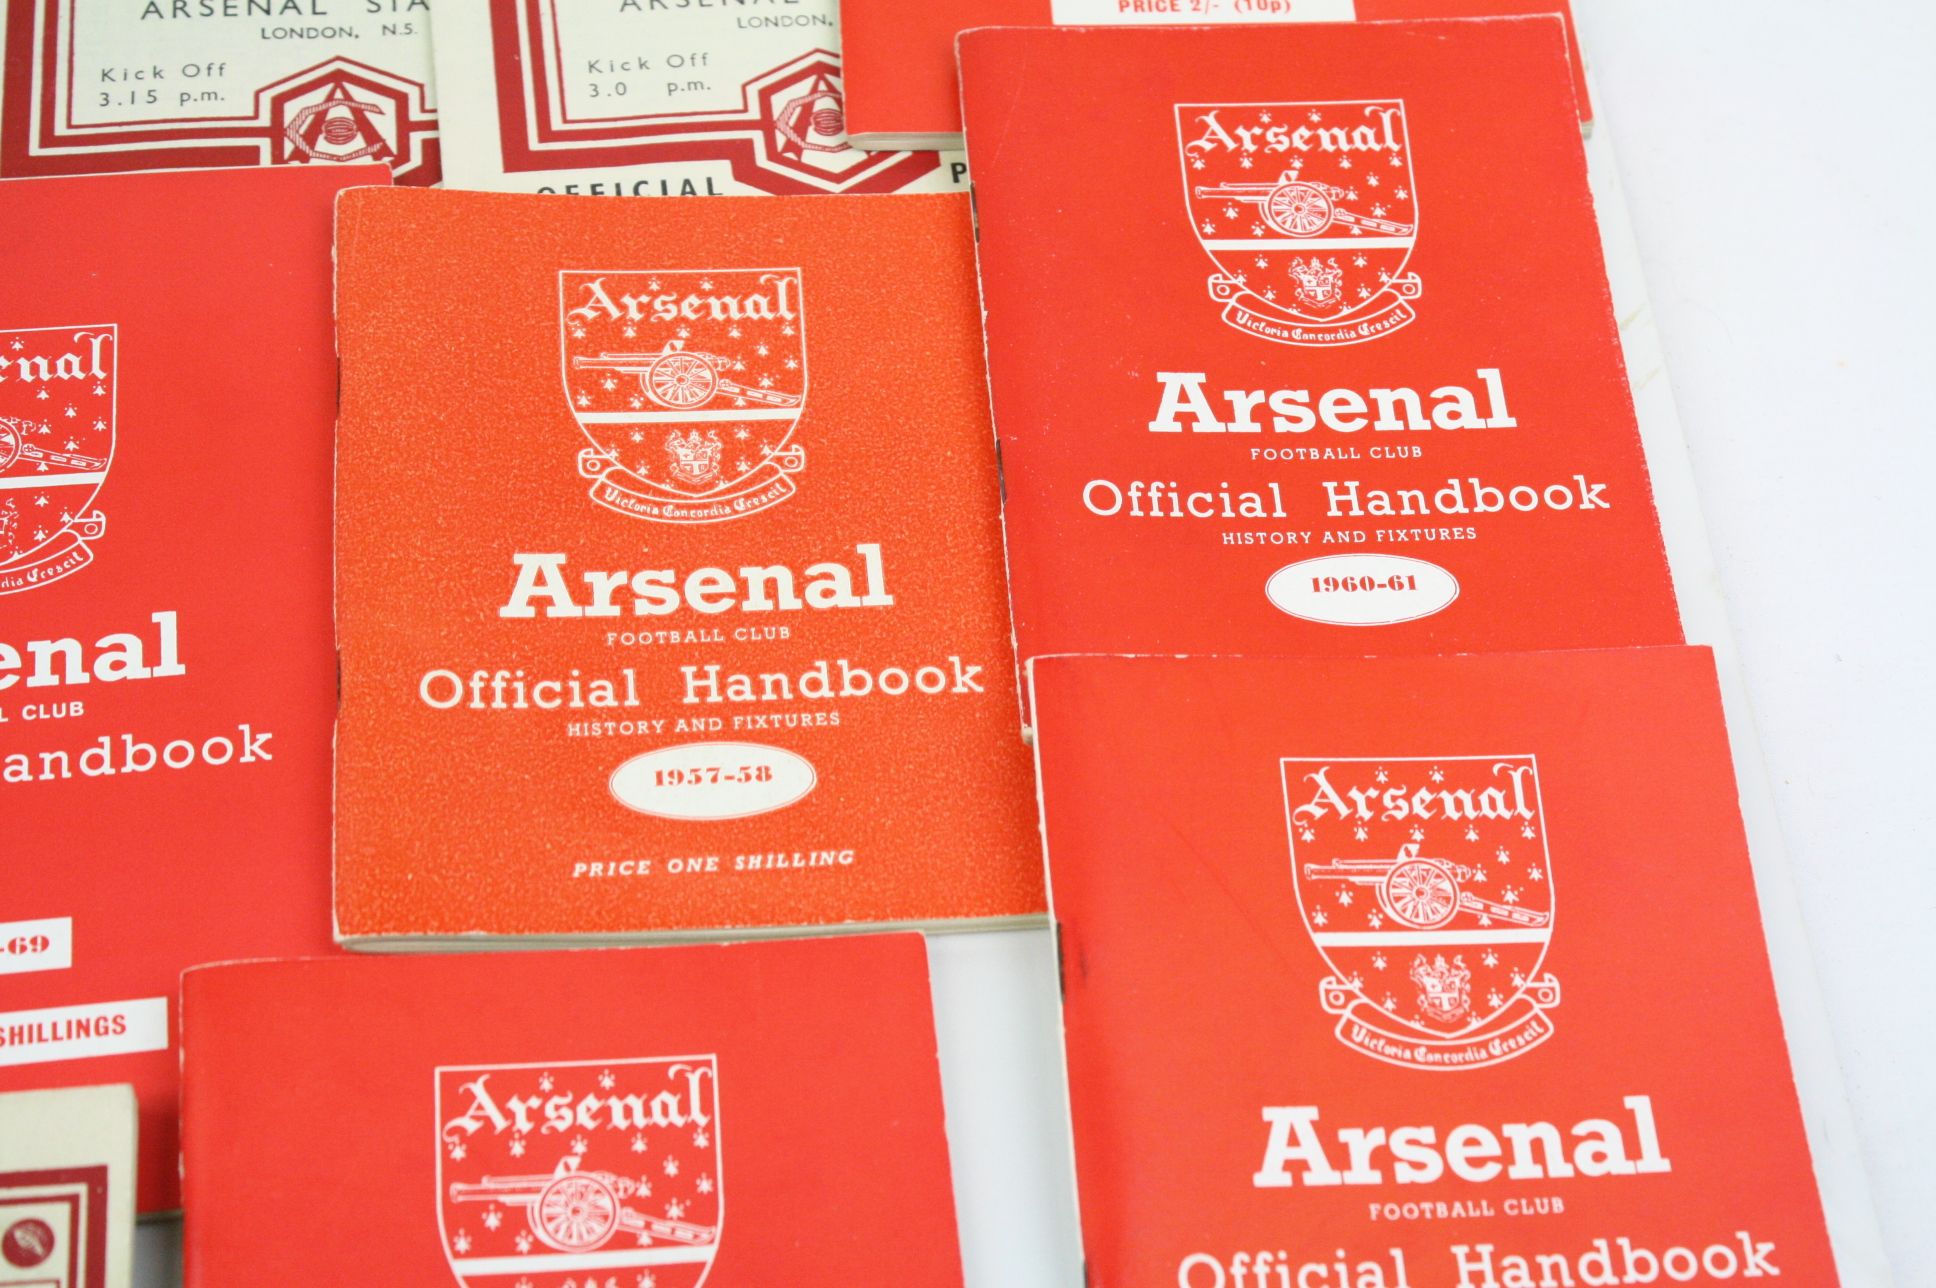 Arsenal Football Club - Group of ephemera to include 2 x 1948 football programmes (v Aston Villa - Image 5 of 8